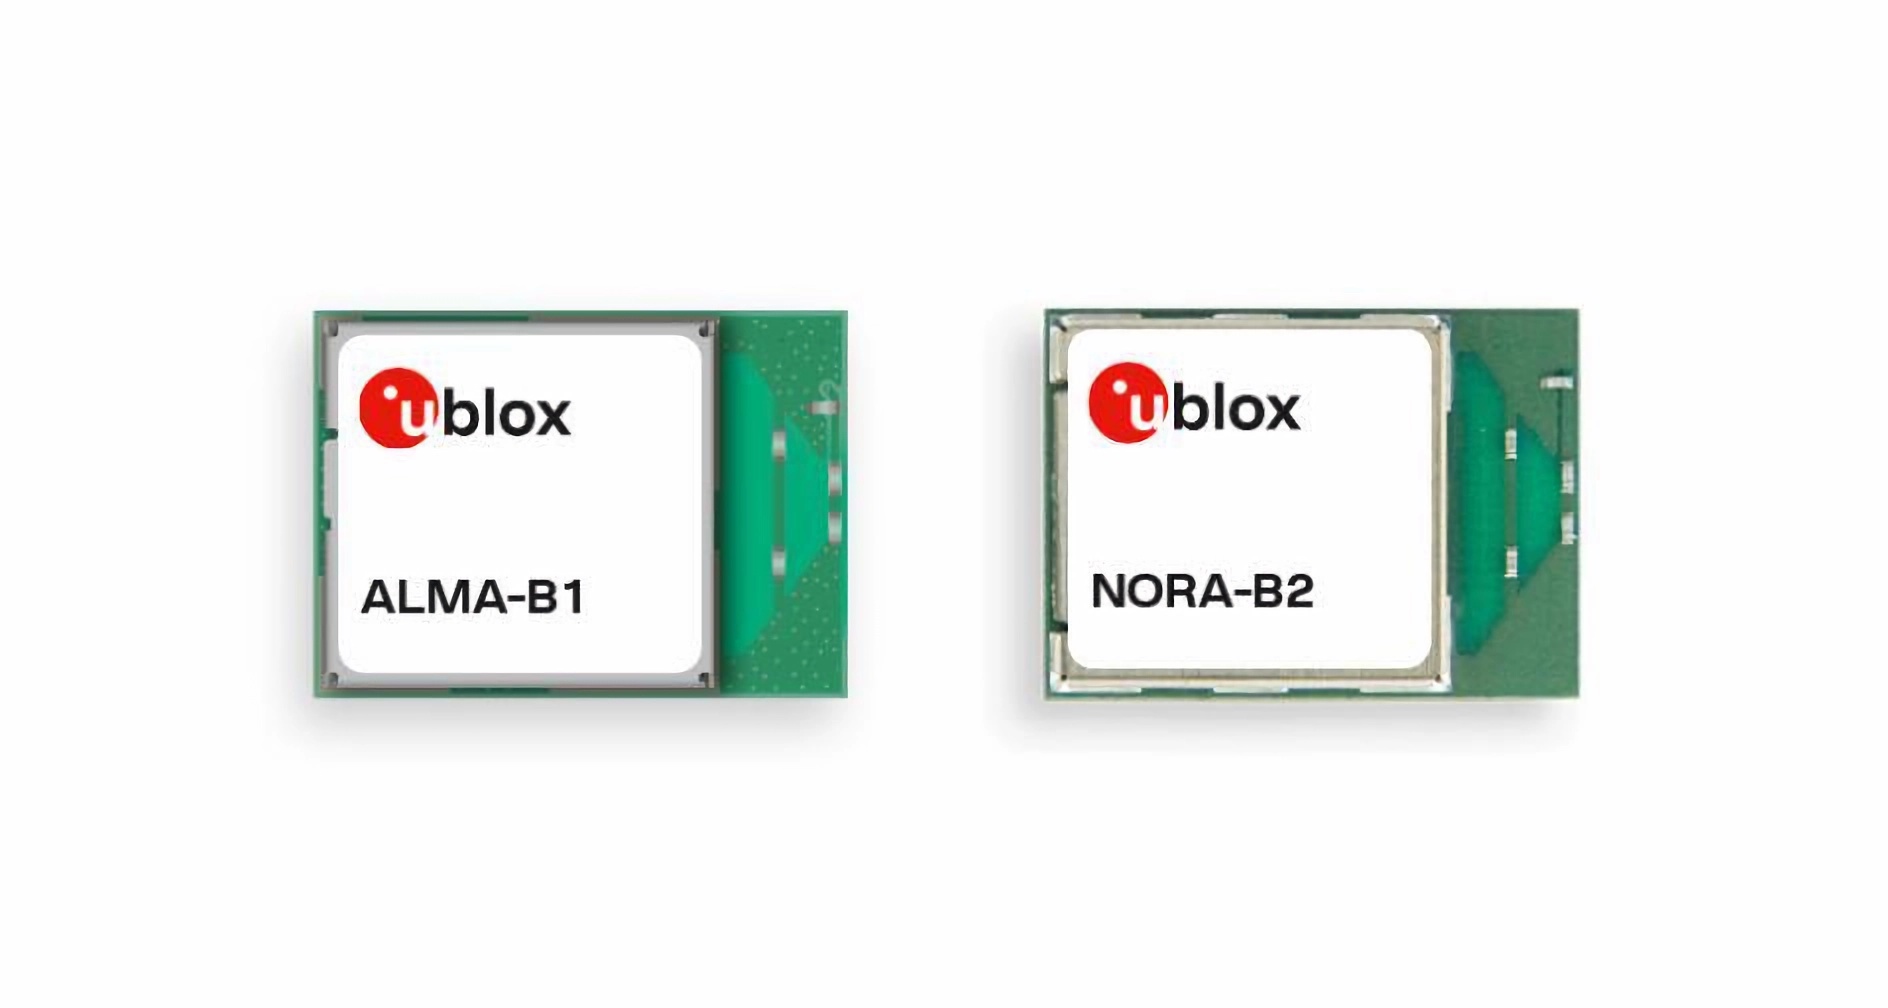 u-blox ALMA-B1 and NORA-B2 modules